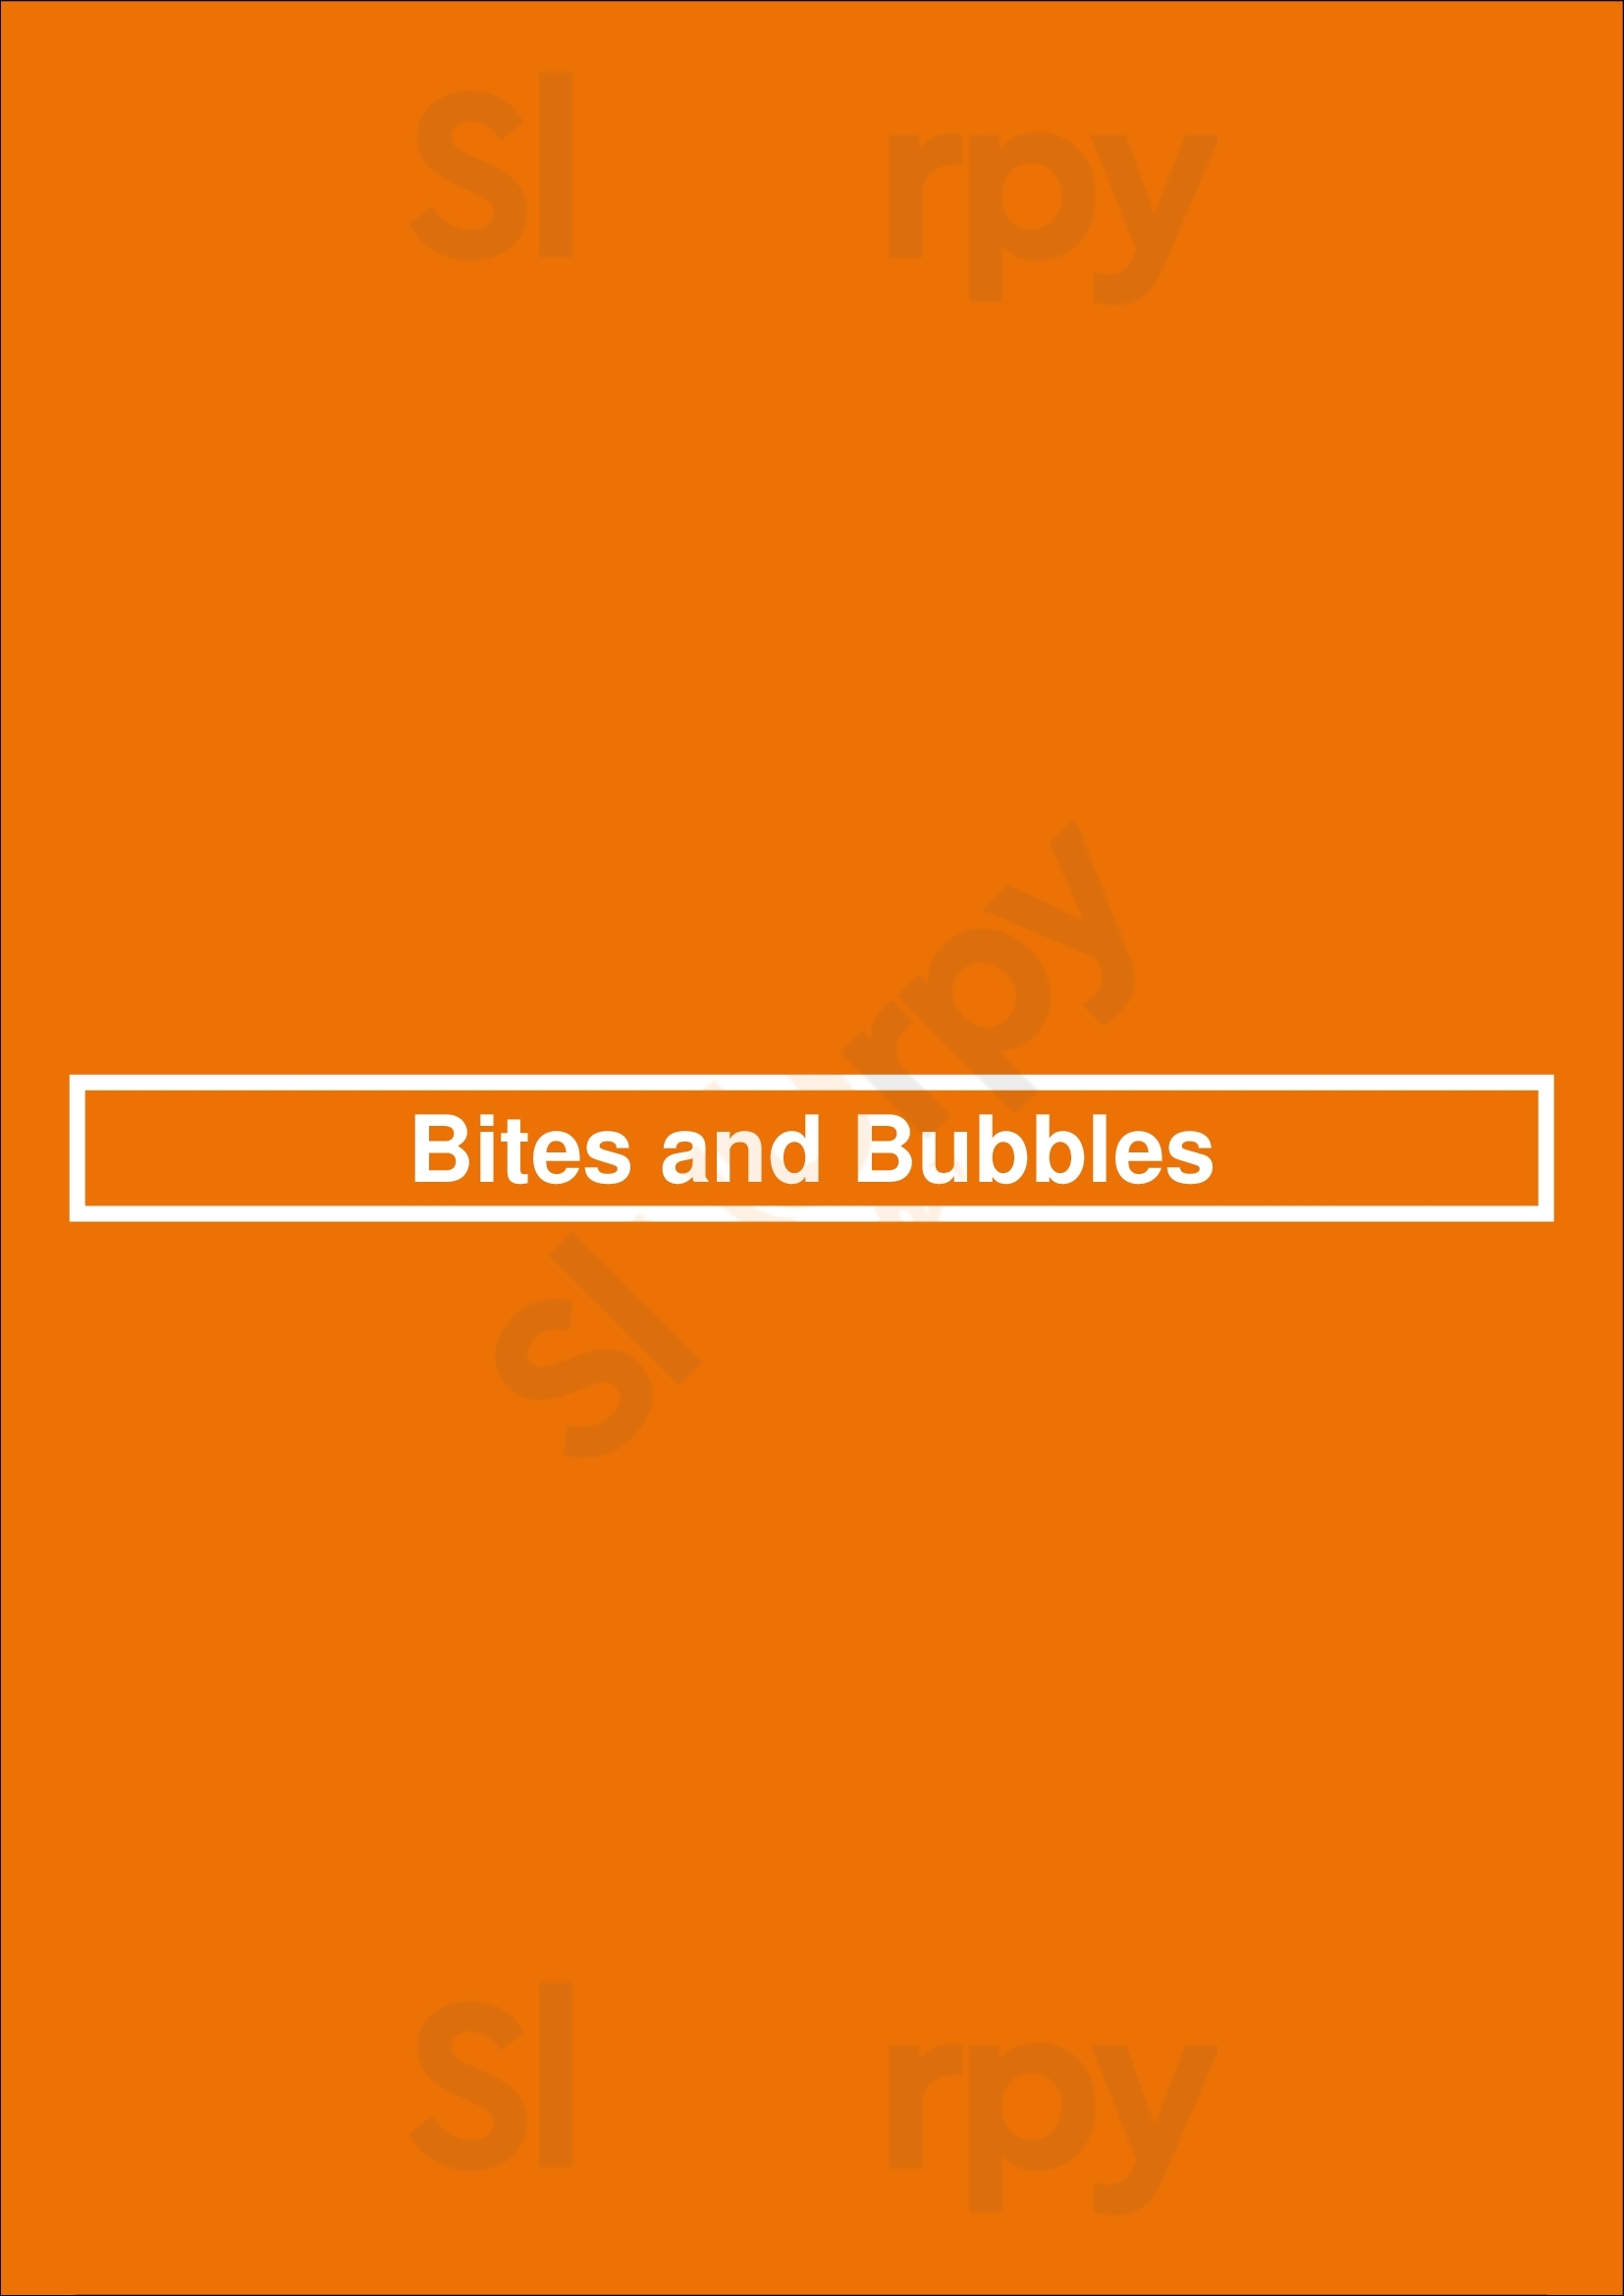 Bites And Bubbles Orlando Menu - 1